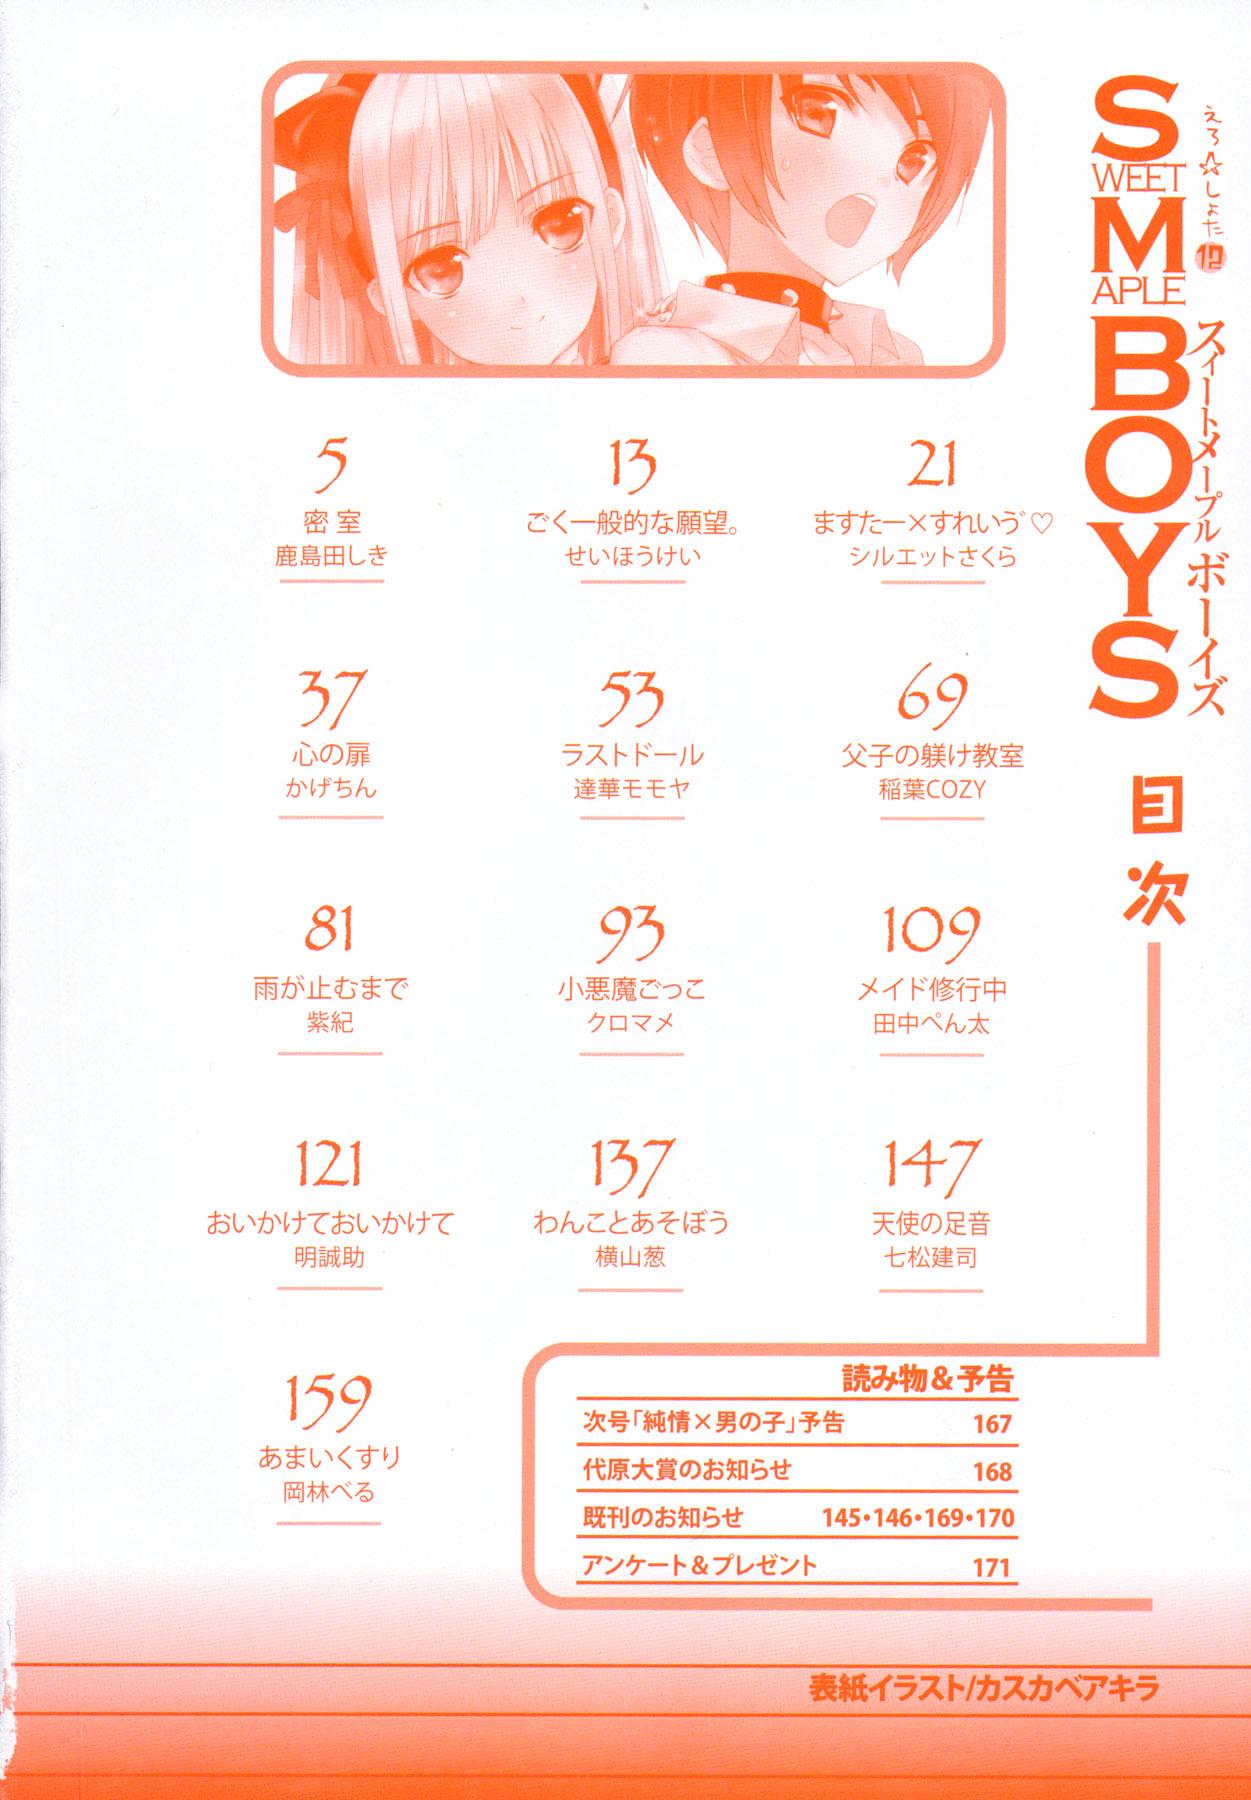 Rope Ero Shota 12 - Sweet Maple Boys Story - Page 3